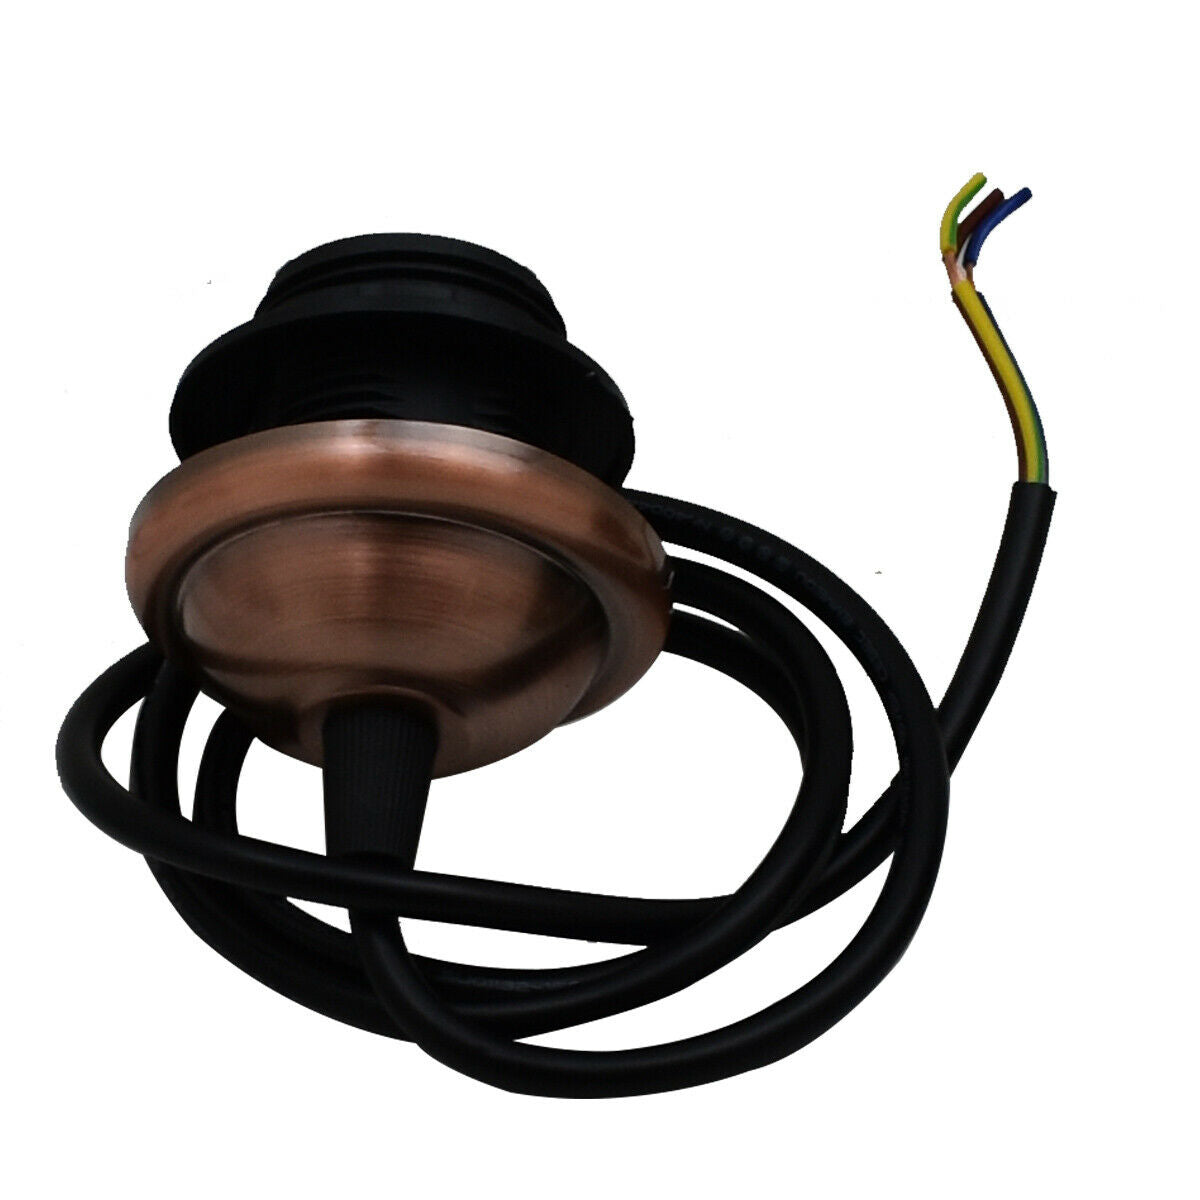 E27 Copper Colour Umbrella Holder PVC 2 Core Round Black Colour 1m Cable Pendant Set~2152 - LEDSone UK Ltd